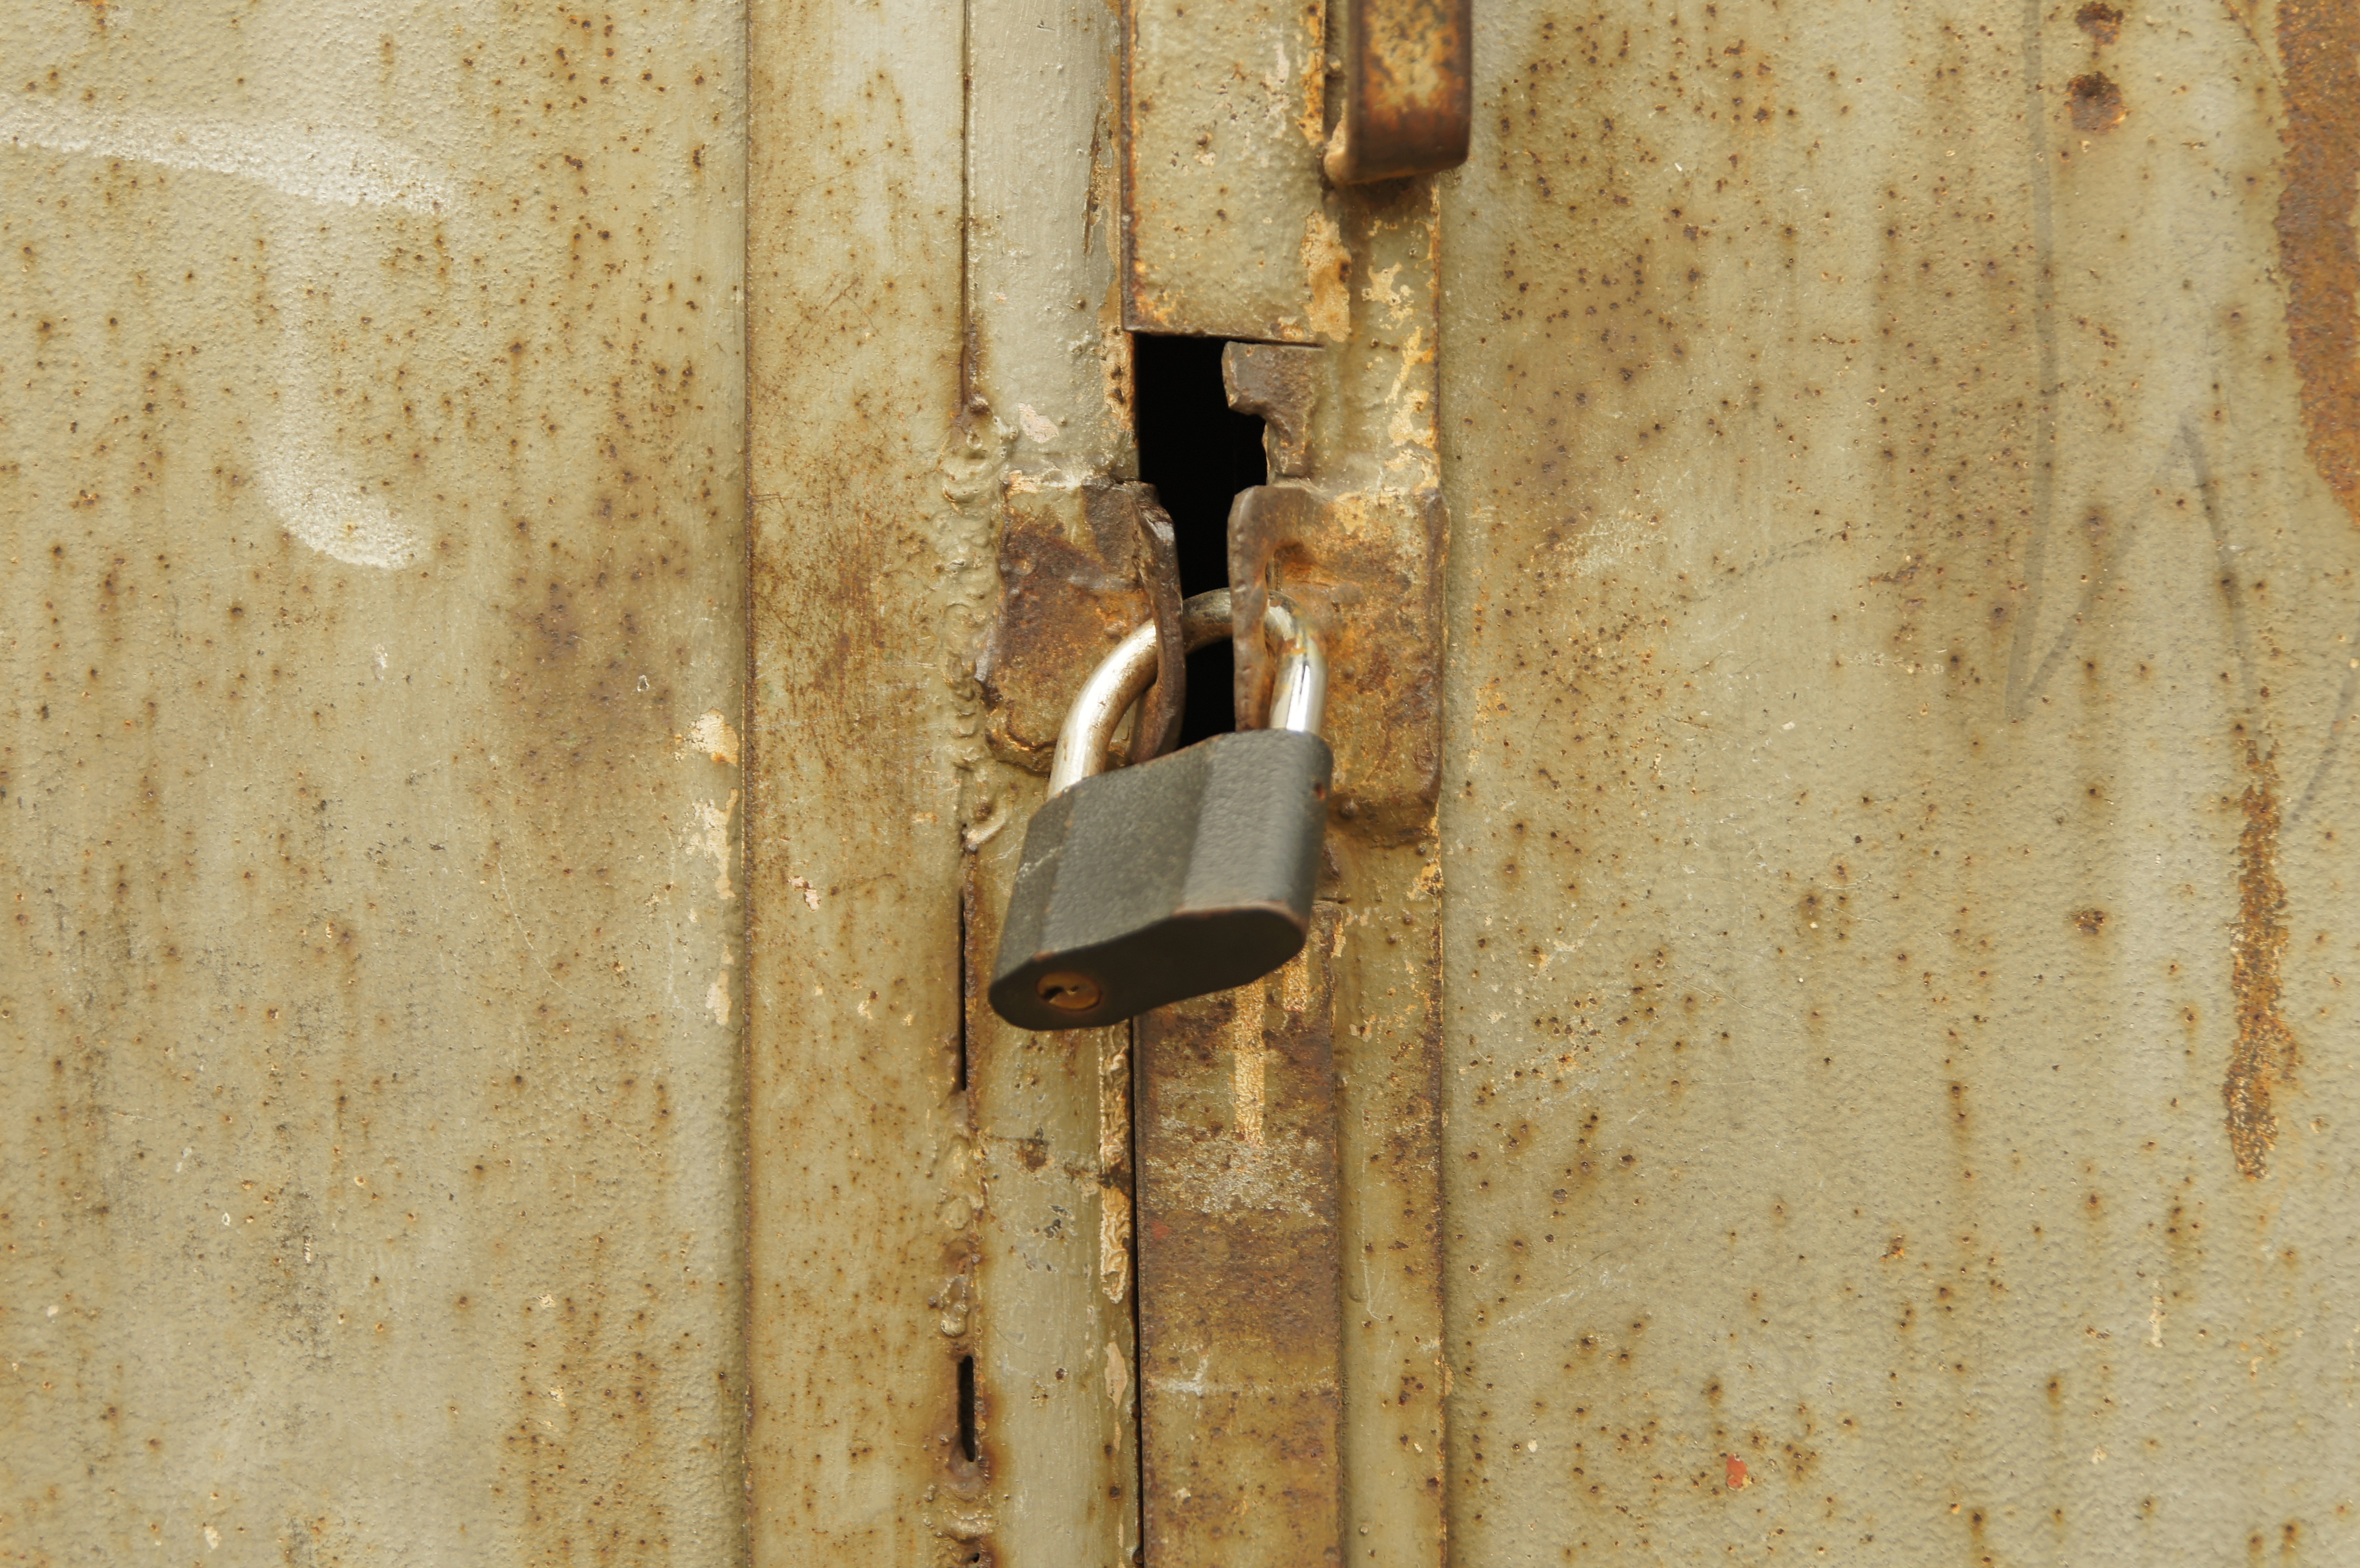 Padlock on old metal door - Our Great Photos